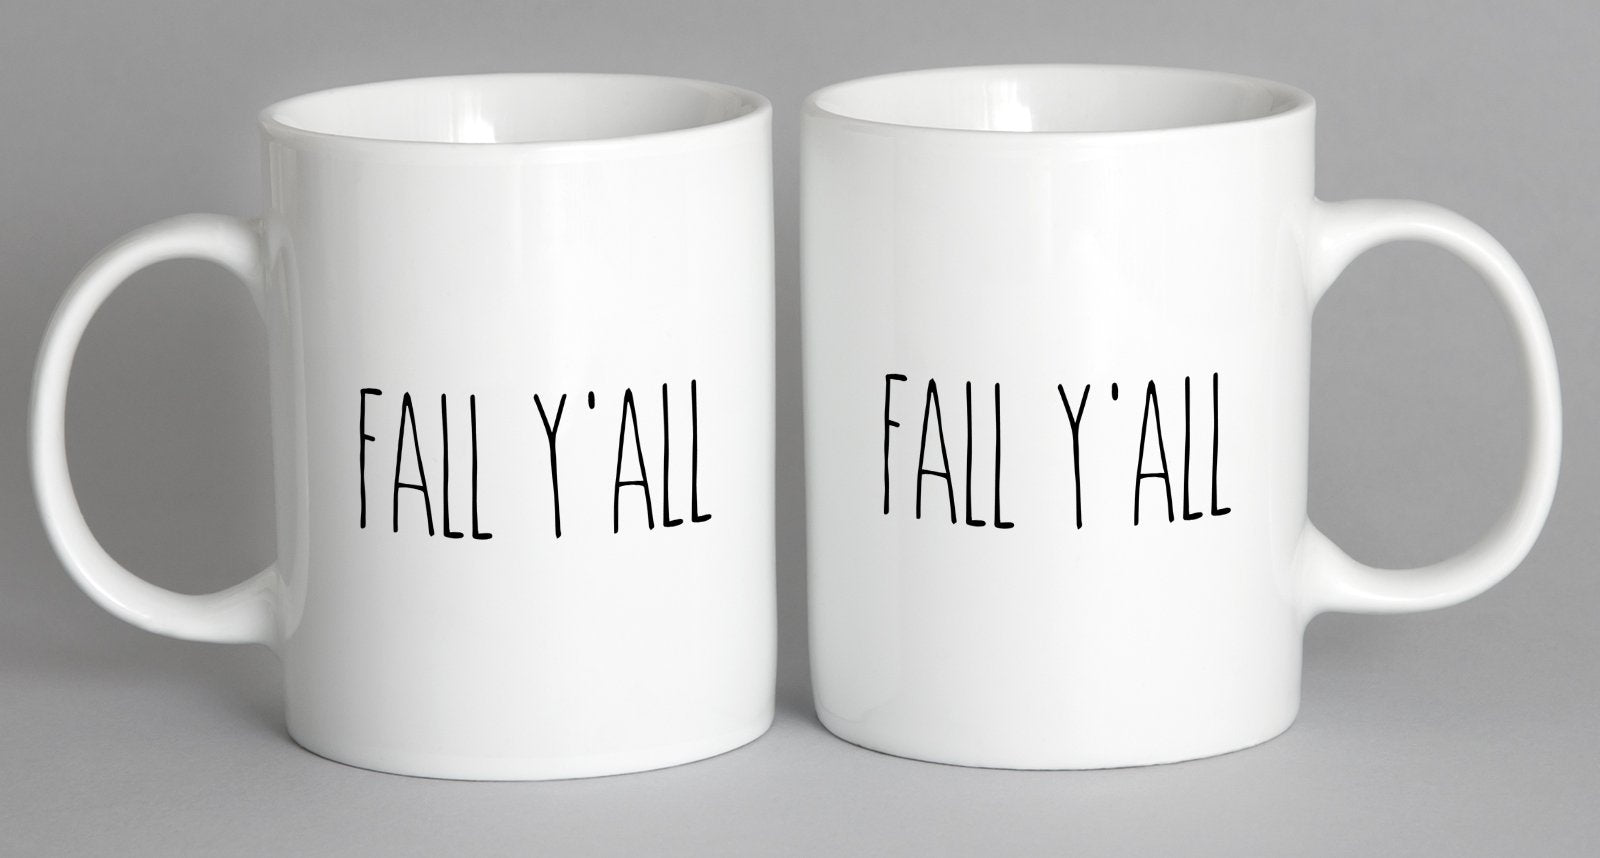 Fall Yall Mug Coffee